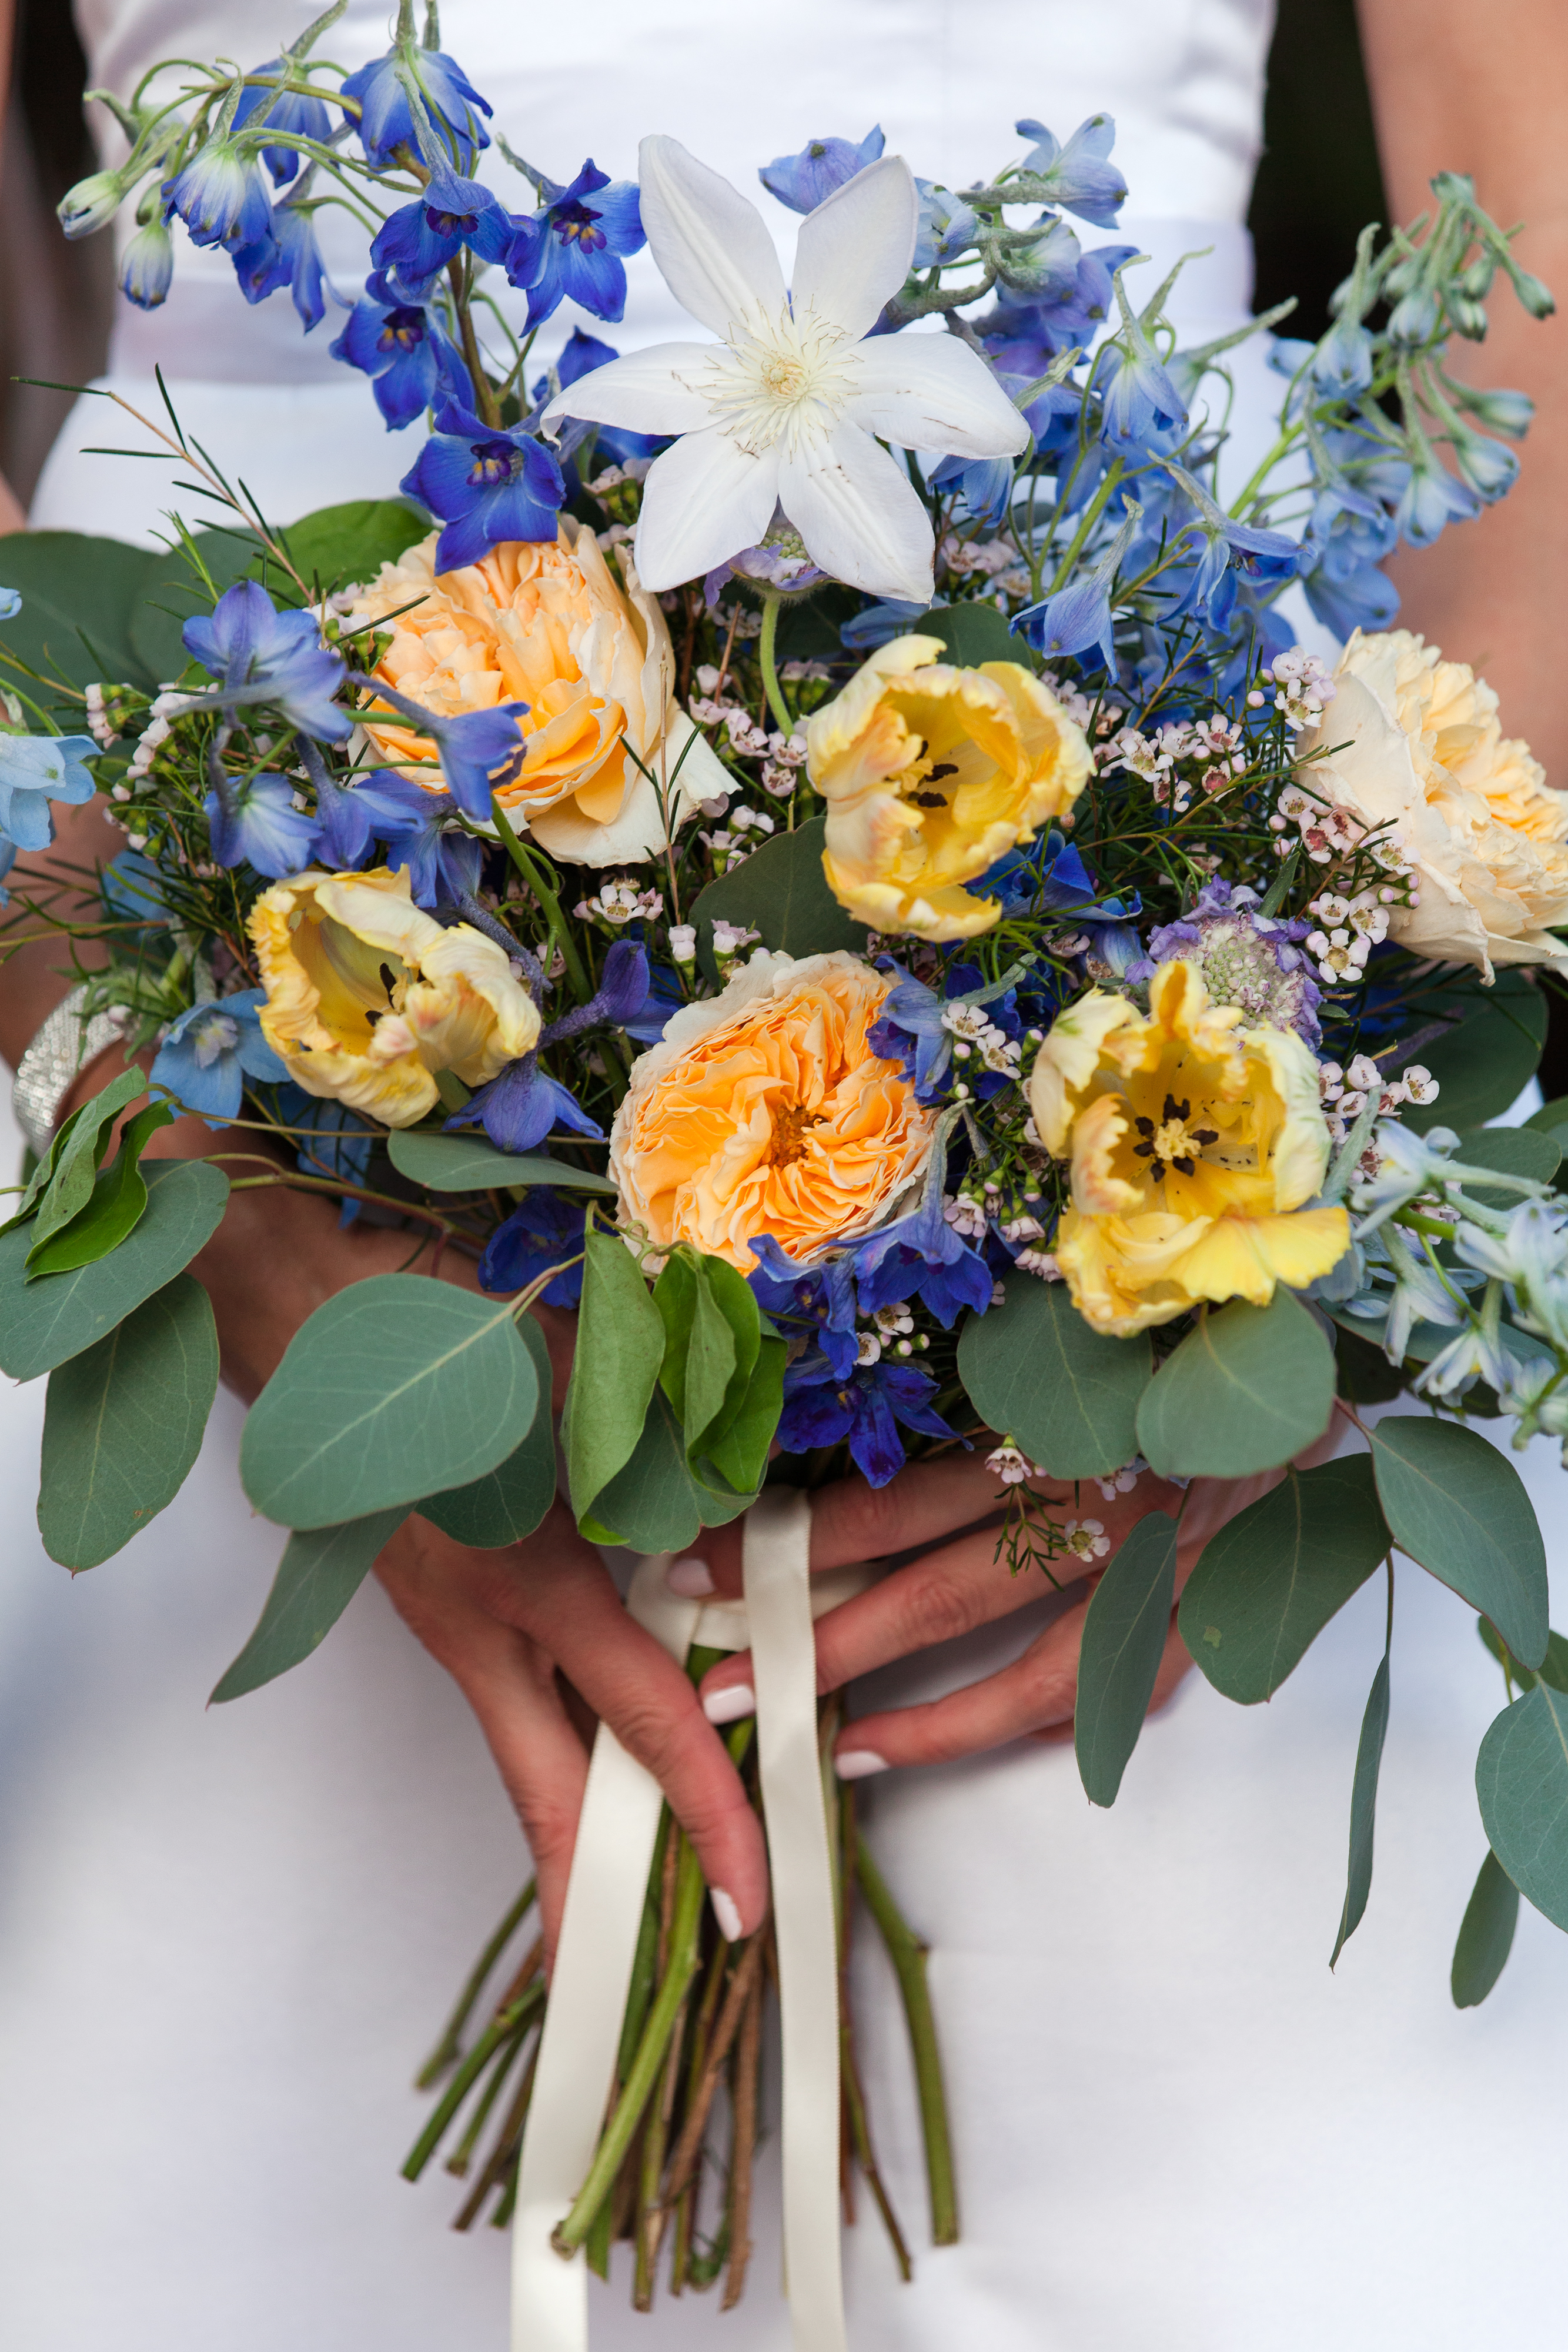 How to Choose Your Wedding Floral Designer